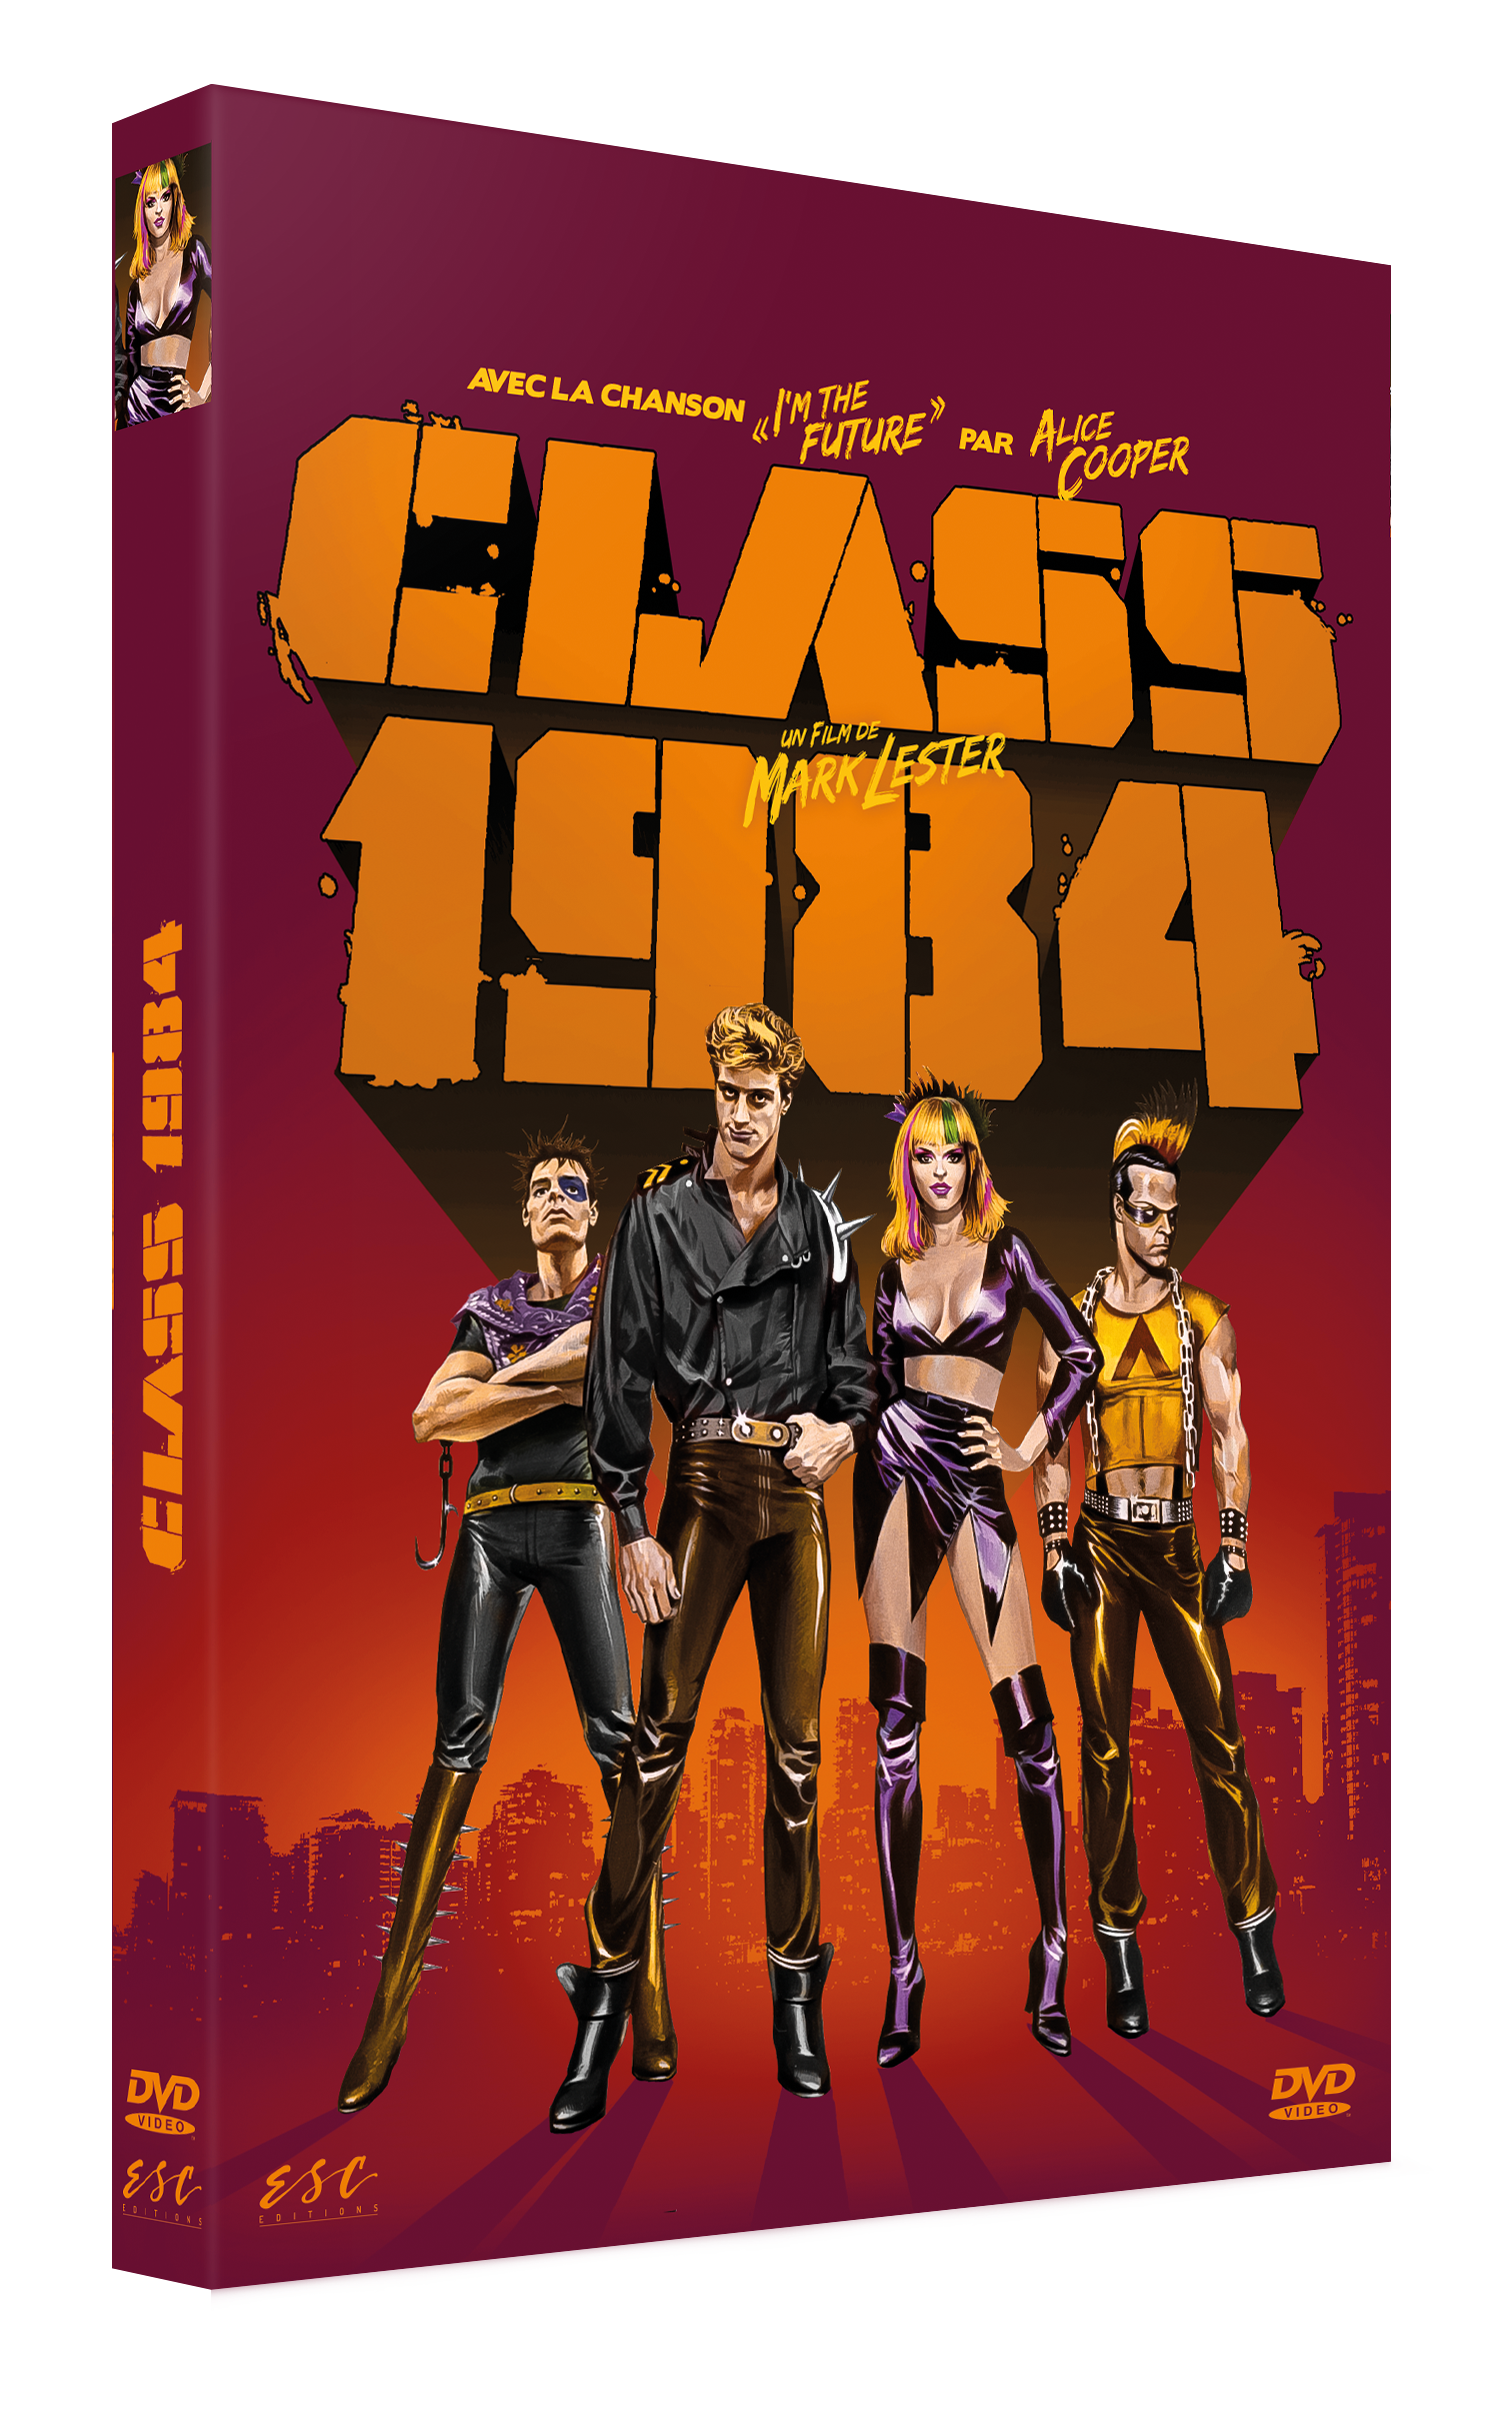 CLASS 1984